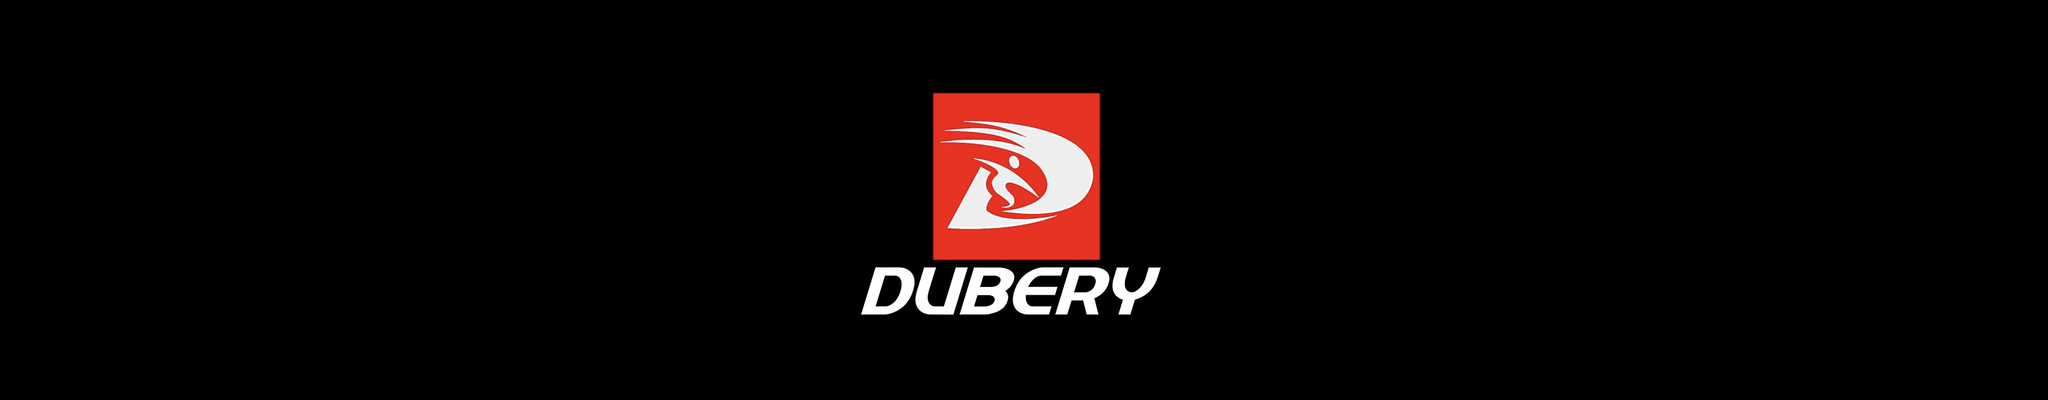 Dubery Sunglasses Logo | www.duberysunglasses.com.